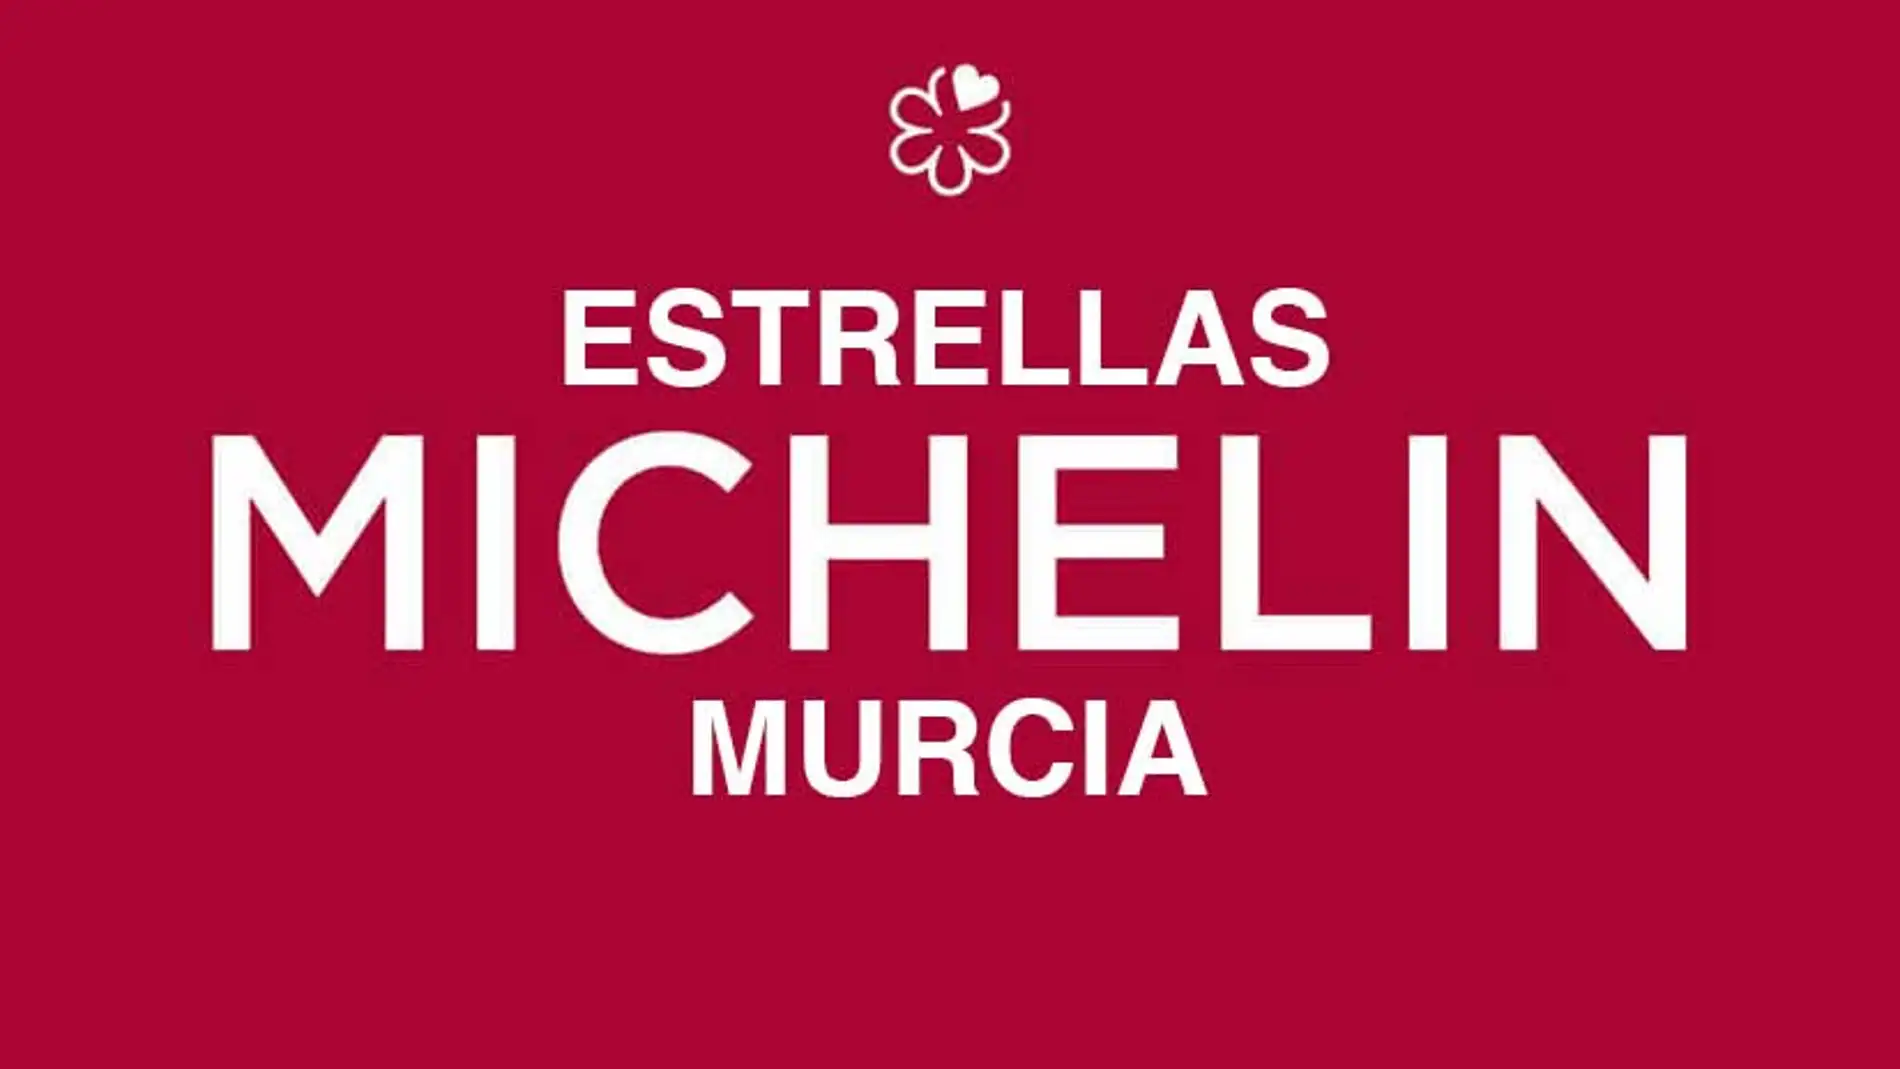 Estrellas Michelín Murcia